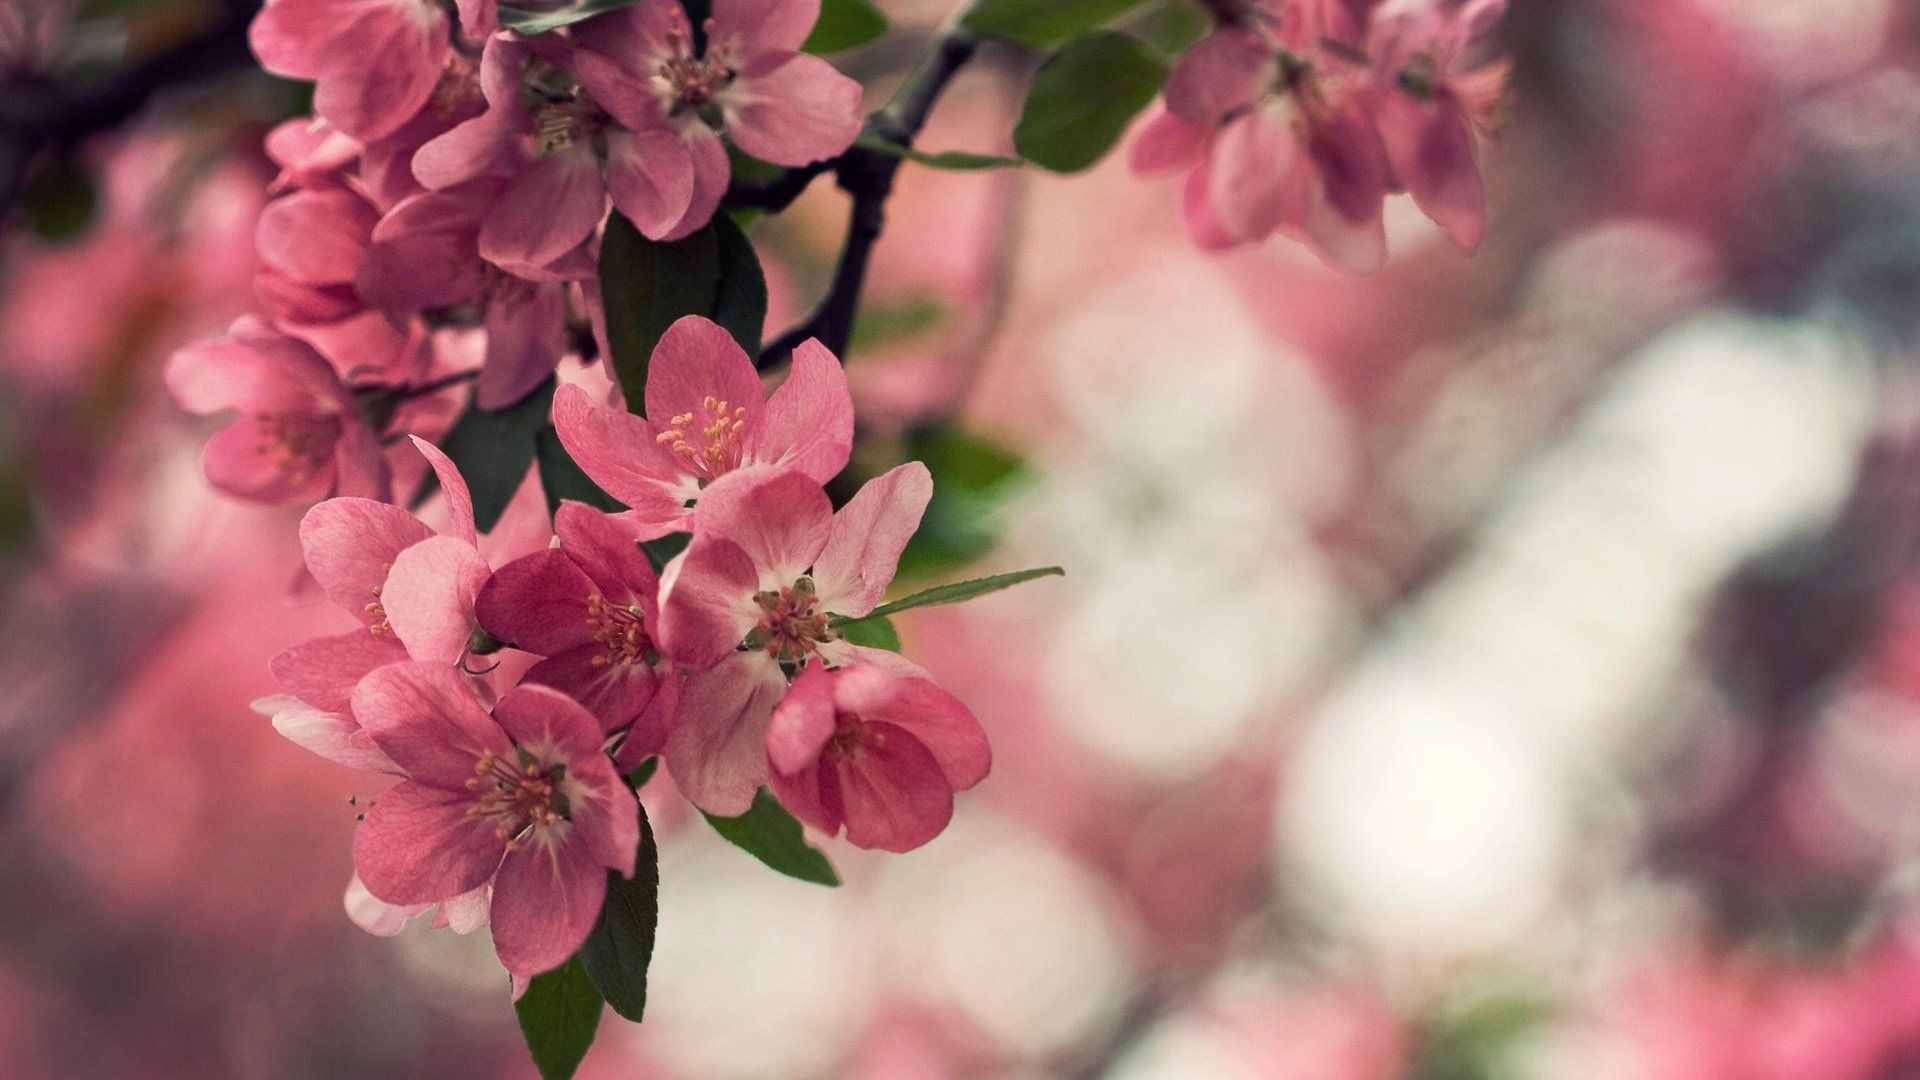 Pink Peach Flower Wallpaper. Cherry blossom wallpaper, Peach flowers, Spring flowers image